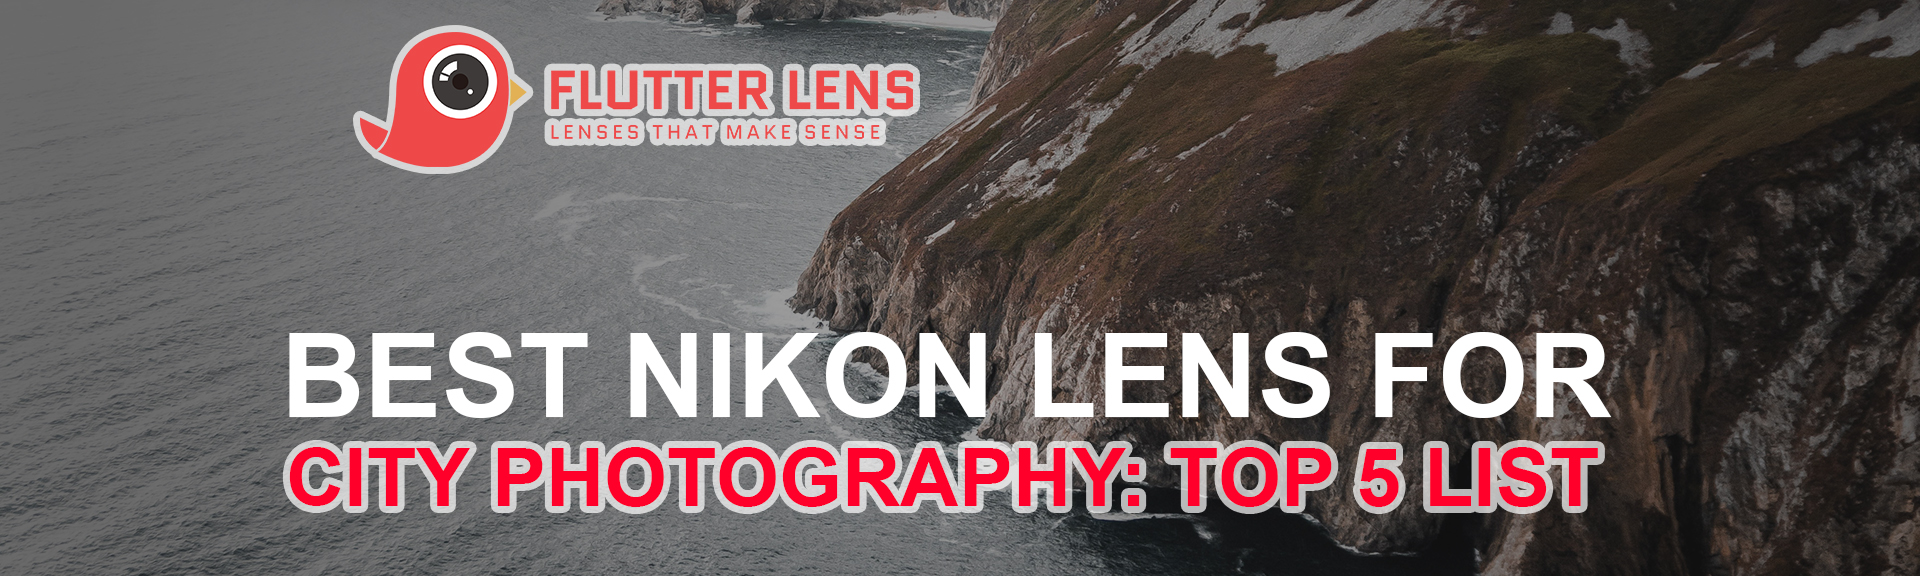 Best Nikon Lens For City Photography Top 5 List